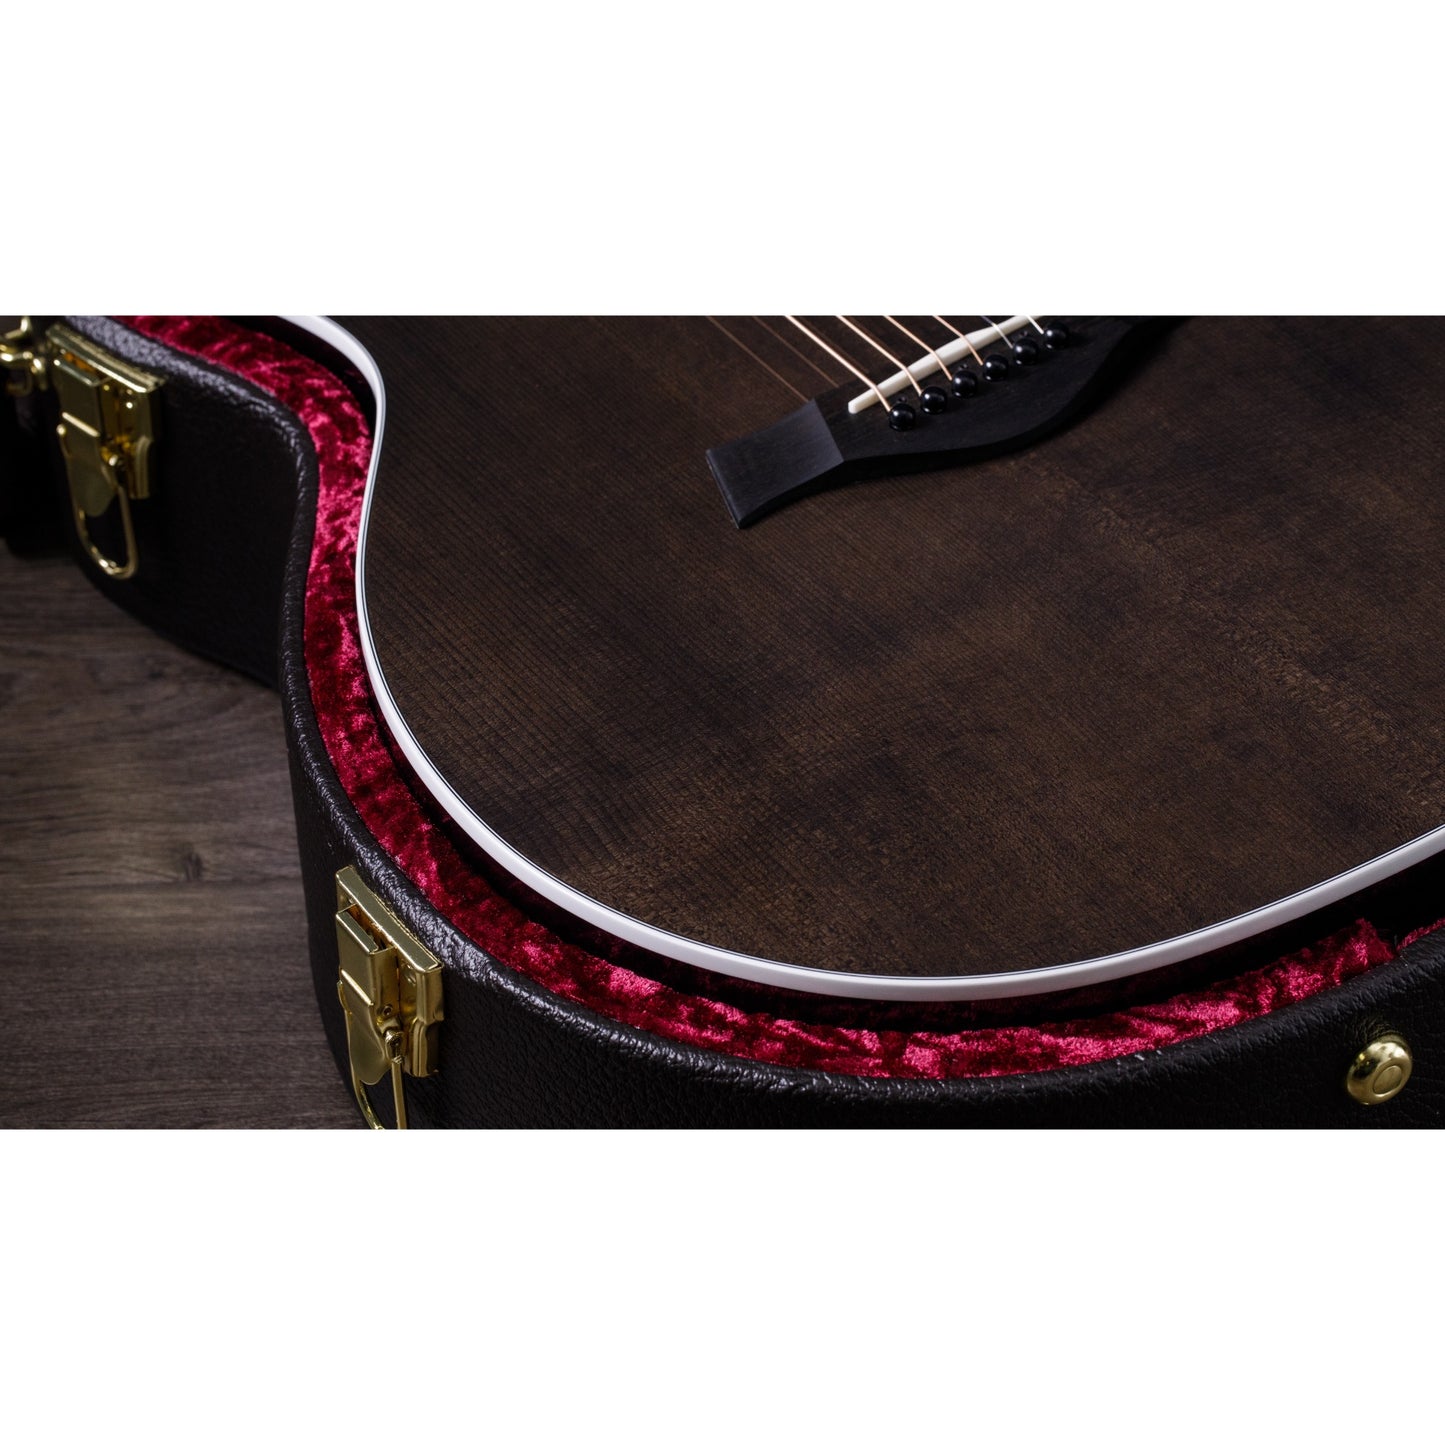 Taylor 214CE DLX LTD Acoustic Electric Guitar in Trans Grey